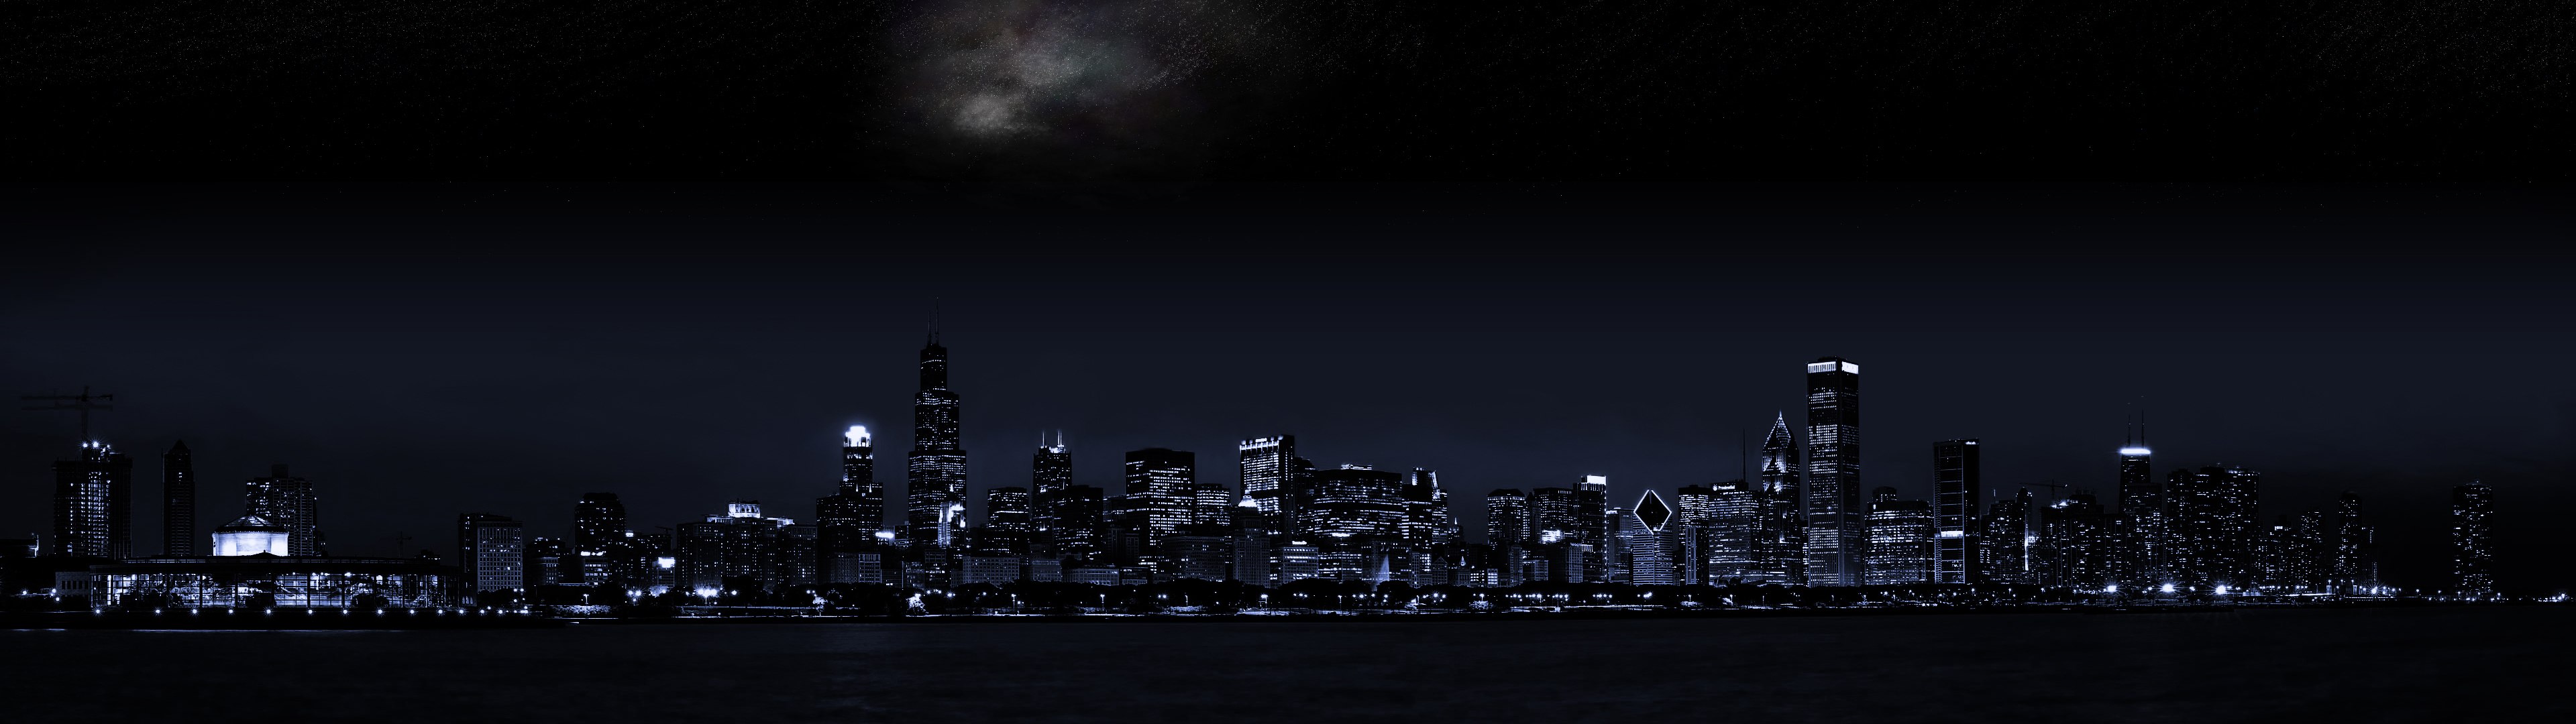 City-At-Night-Wallpaper-3840x108